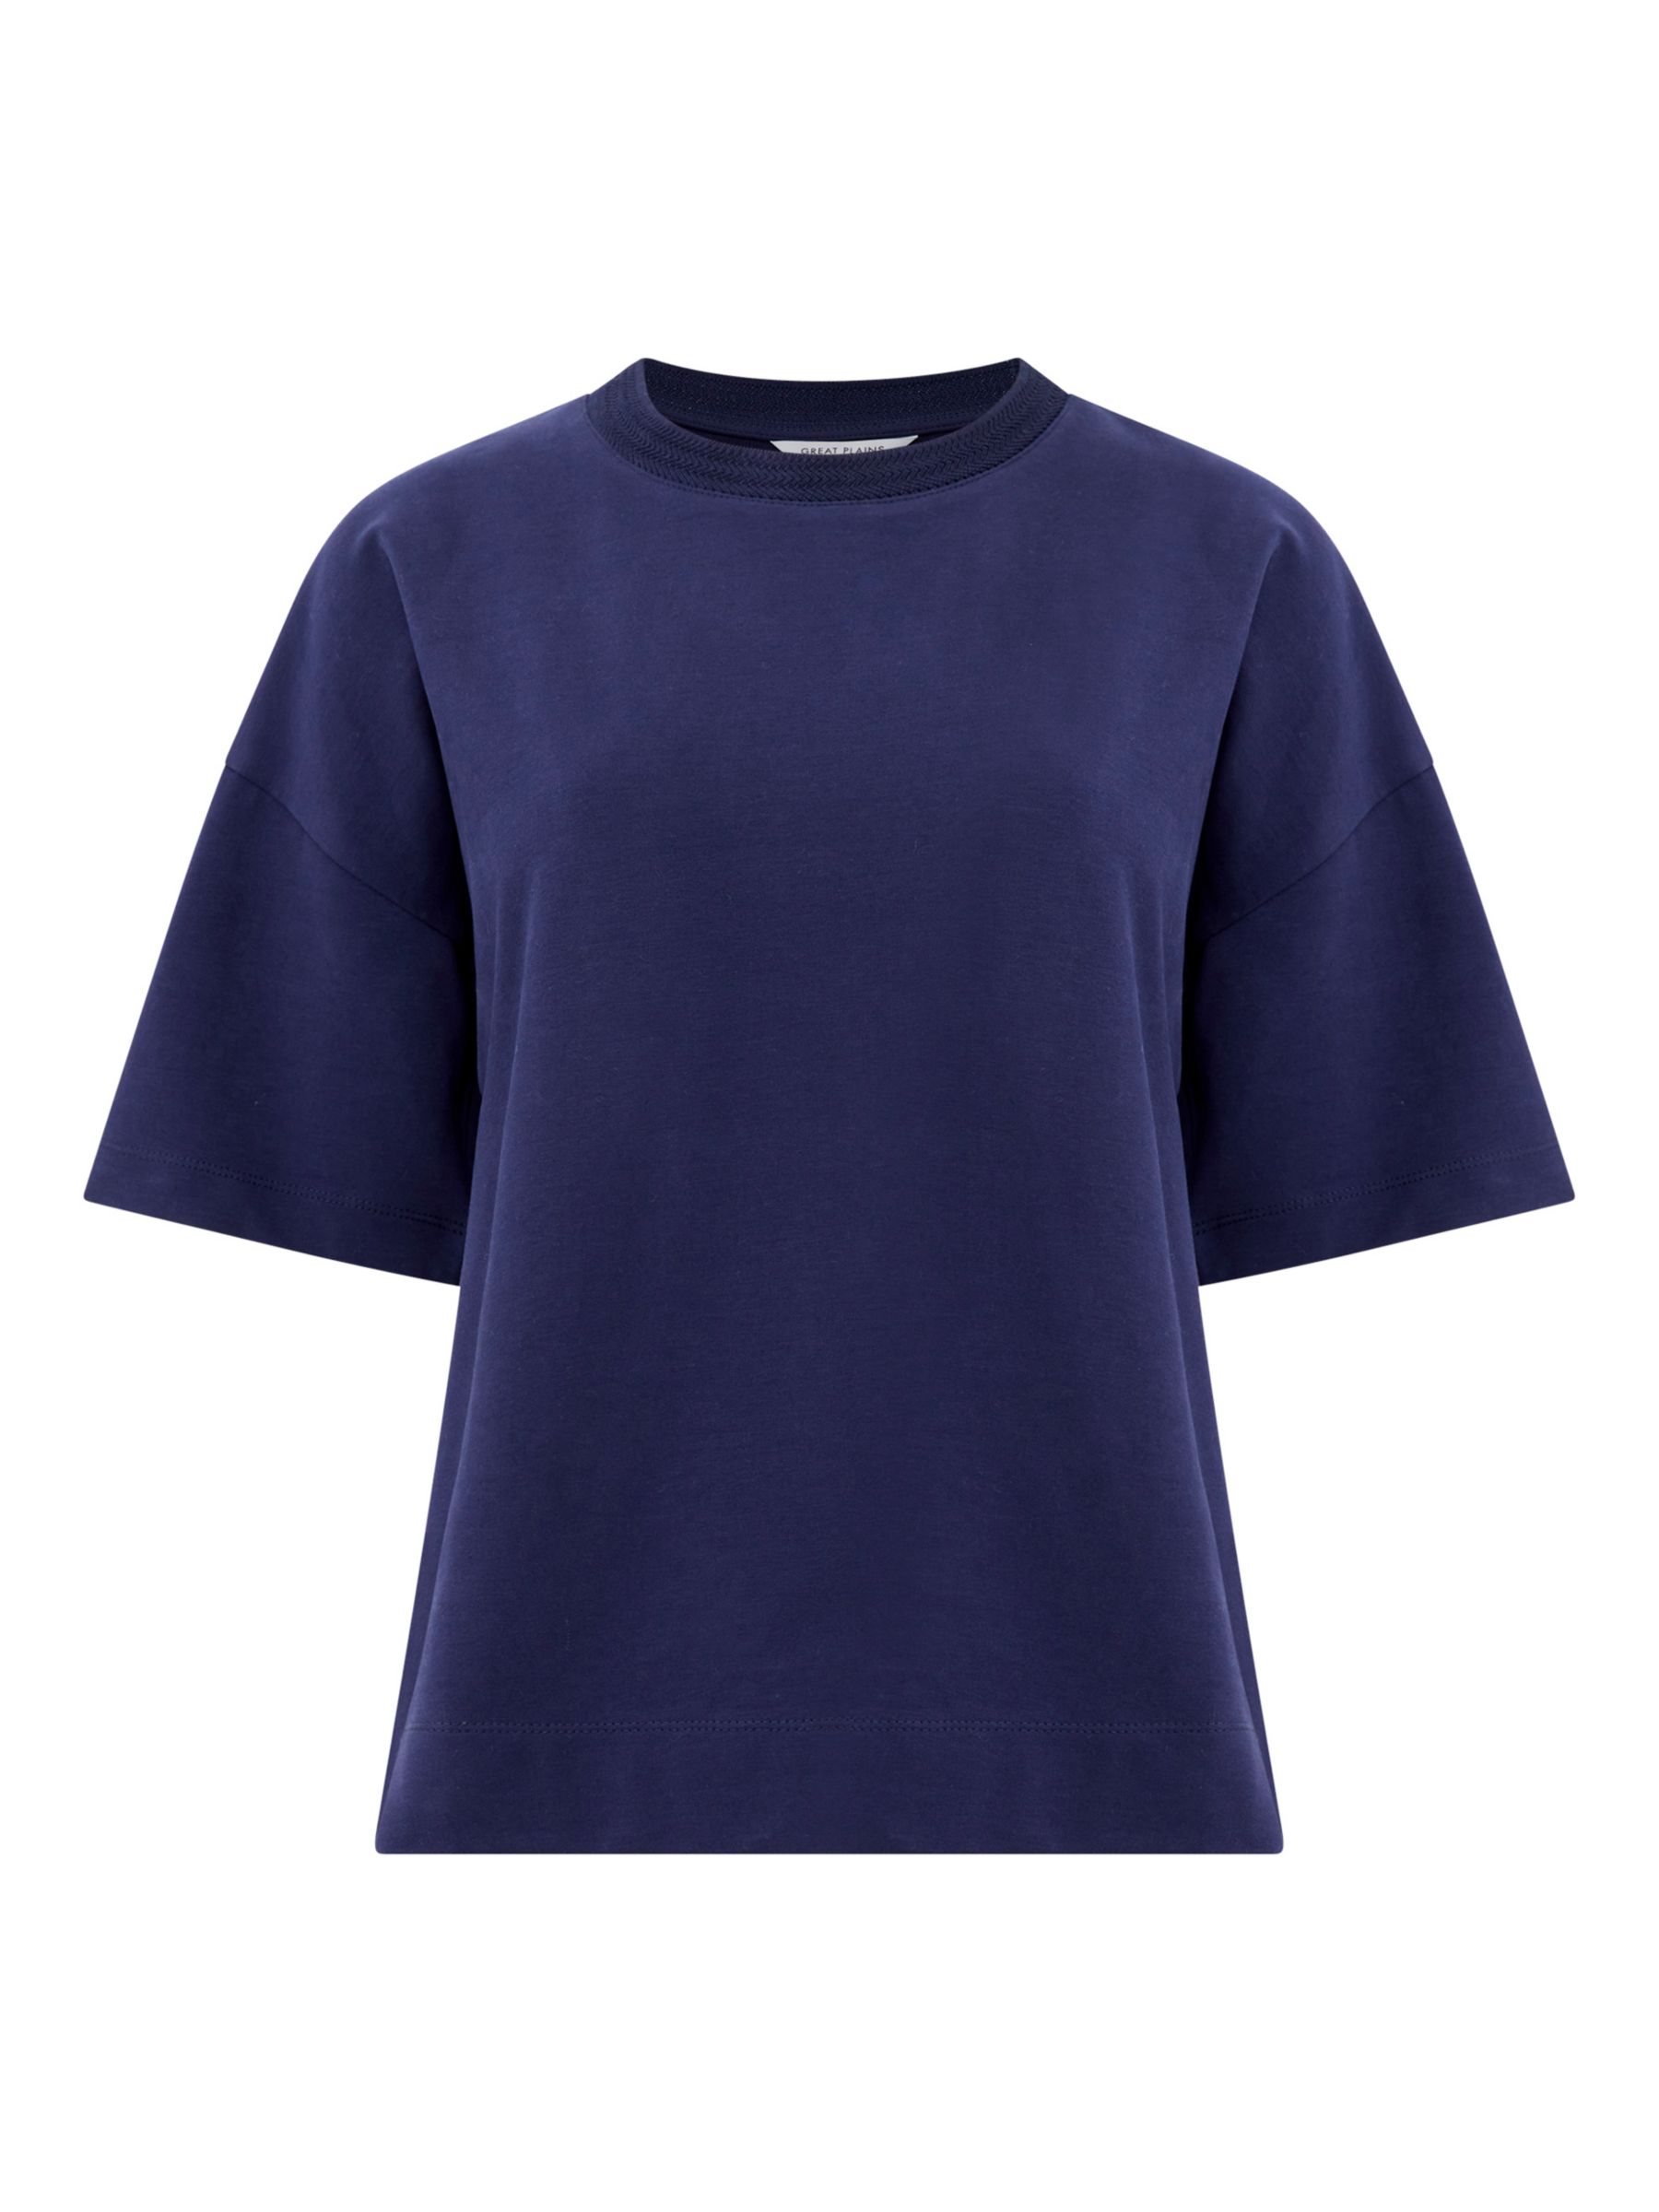 Buy Great Plains Peached Cotton Blend Short Sleeve Sweatshirt, Summer Navy Online at johnlewis.com